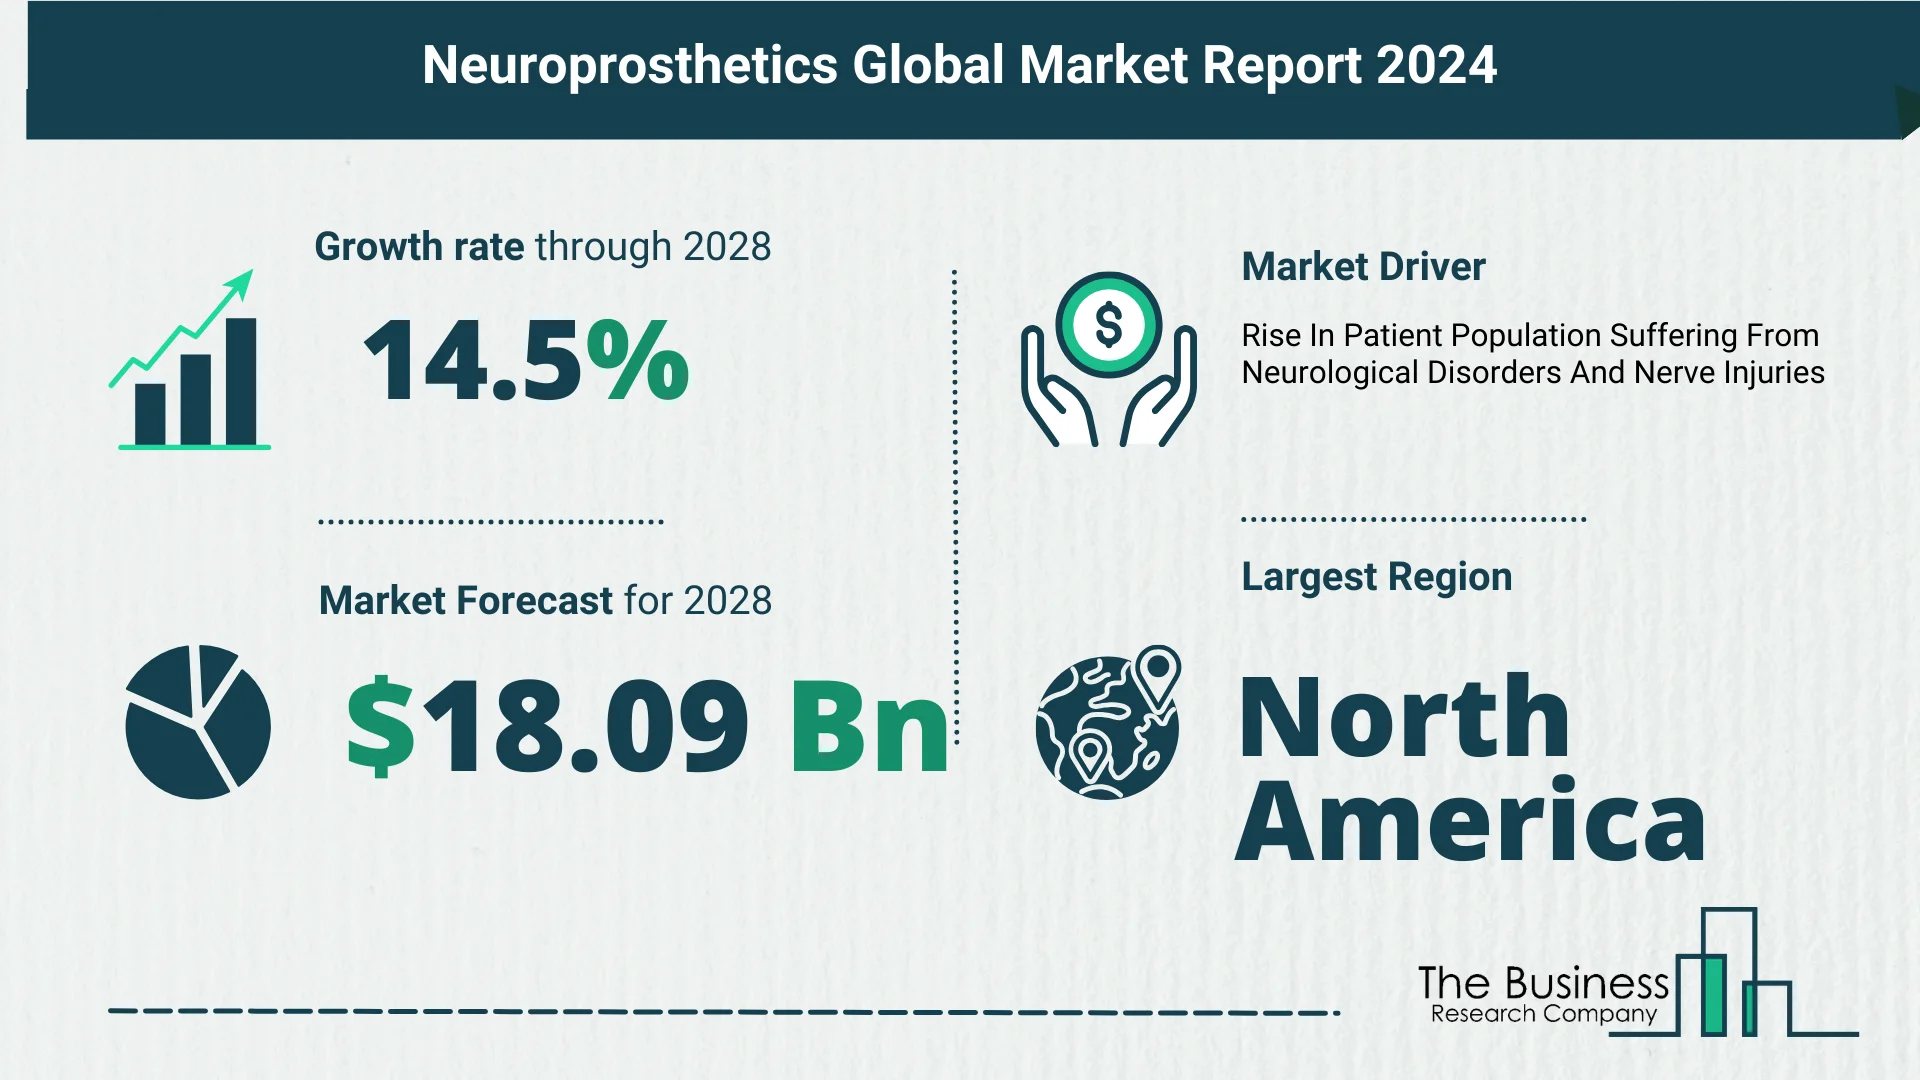 5 Takeaways From The Neuroprosthetics Market Overview 2024